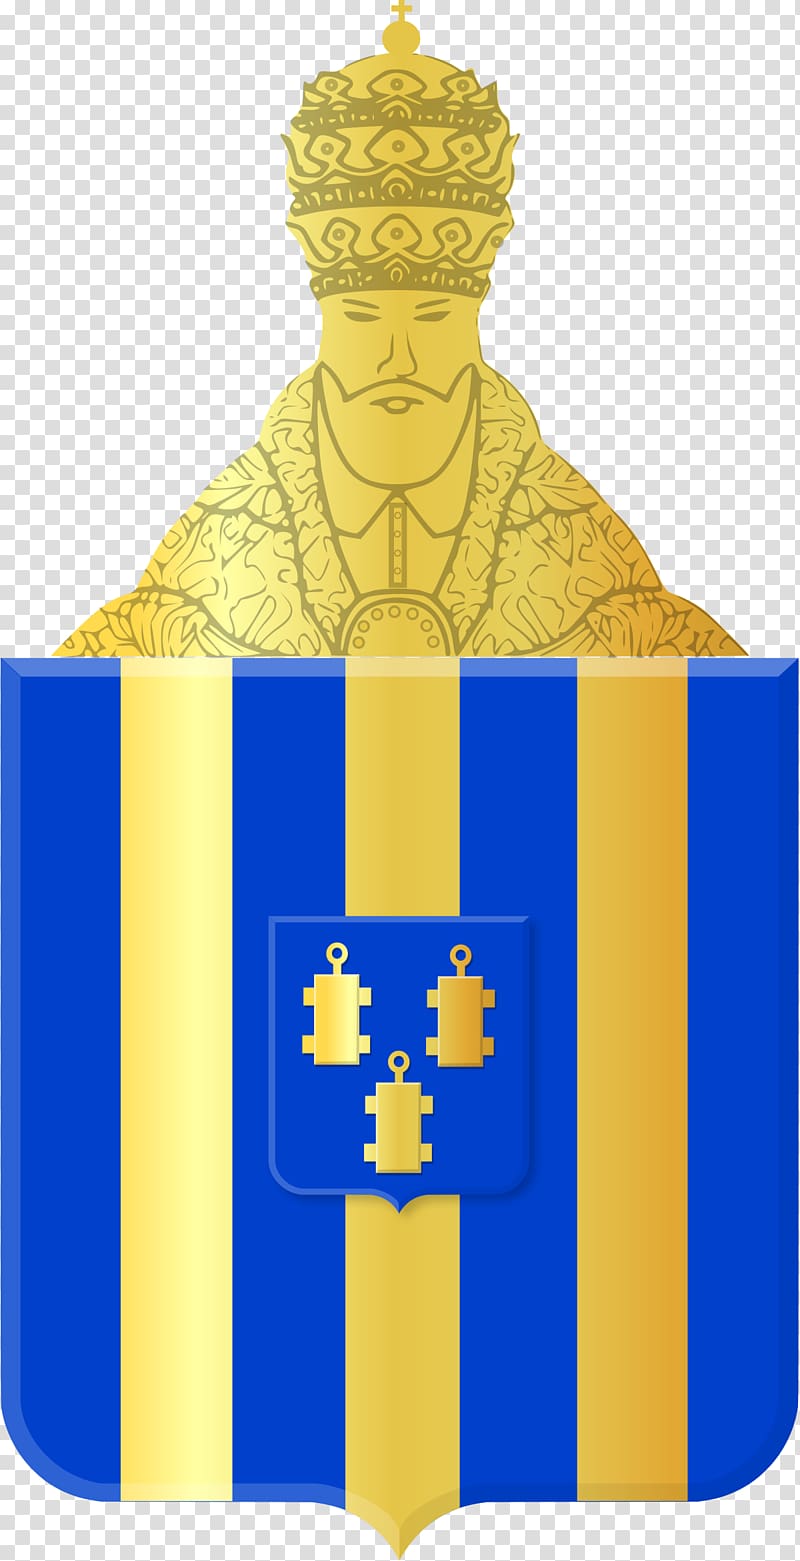 Schelle Geel Coat of arms Herenthout Hemiksem, coat of arms lion transparent background PNG clipart